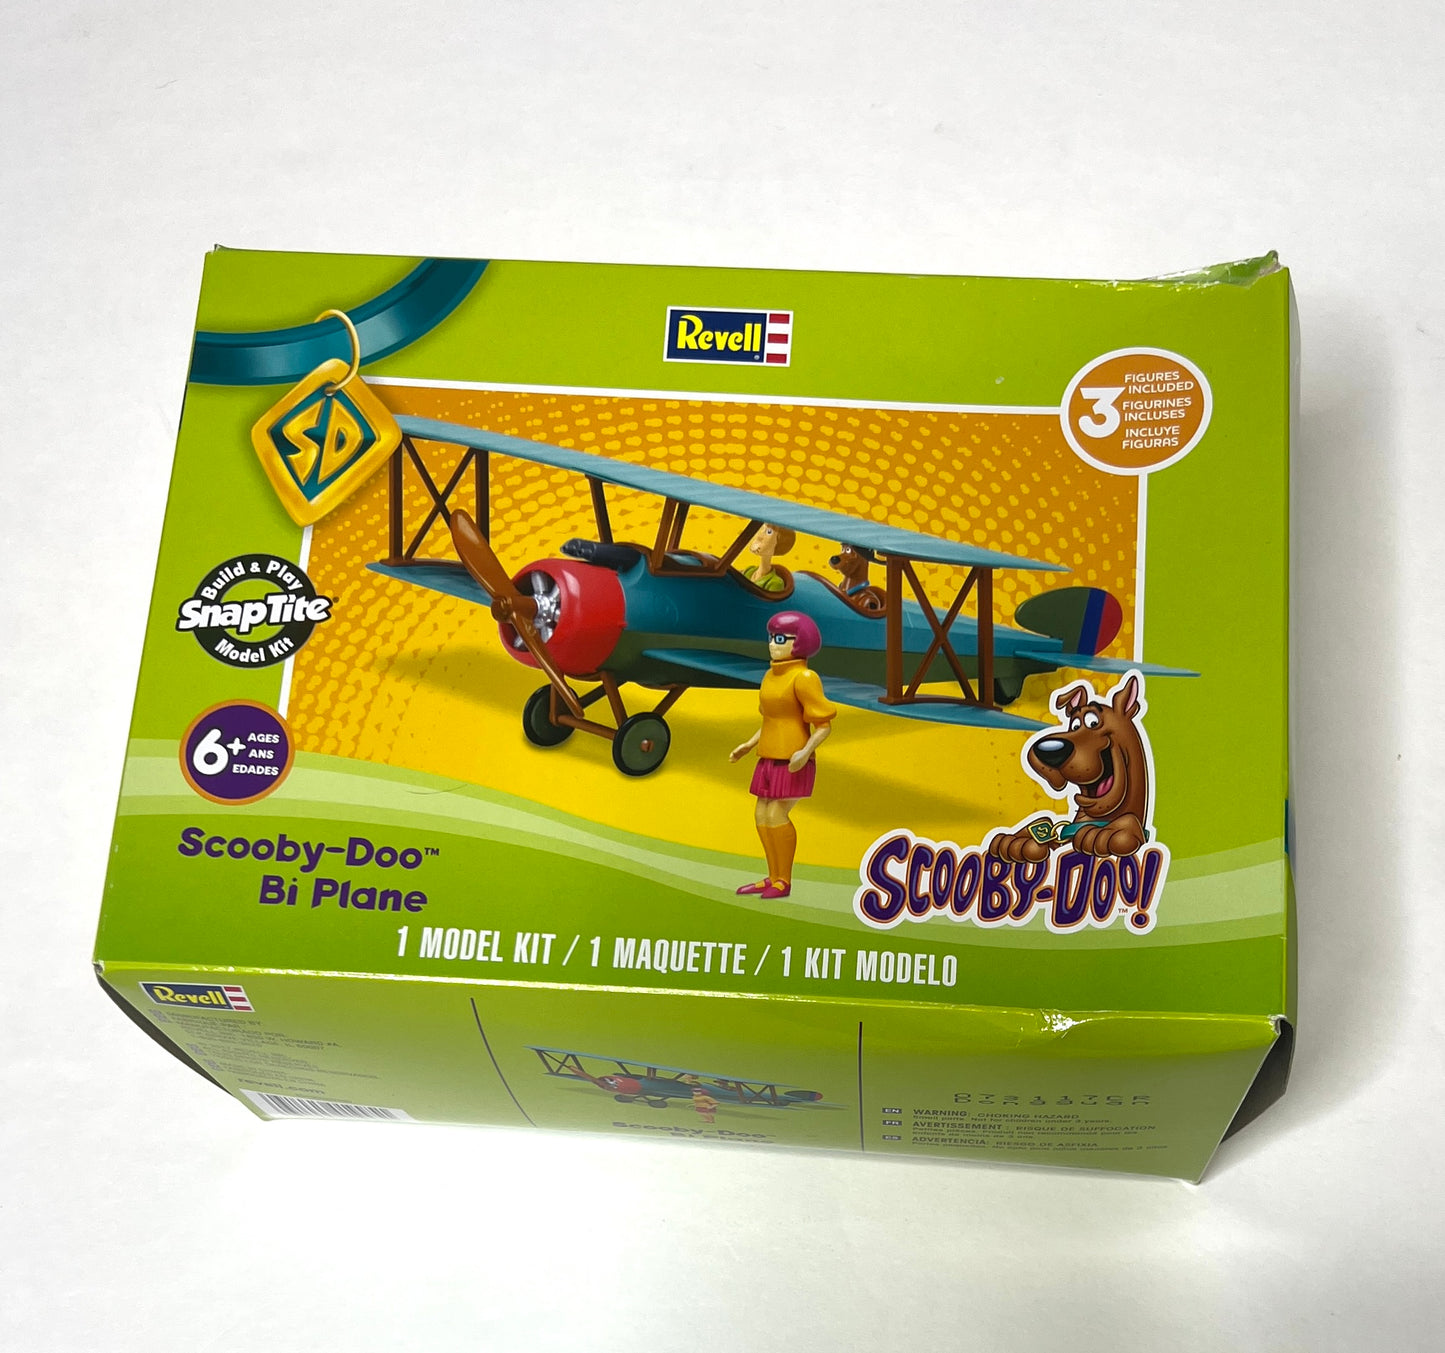 Scooby Doo Airplane Model